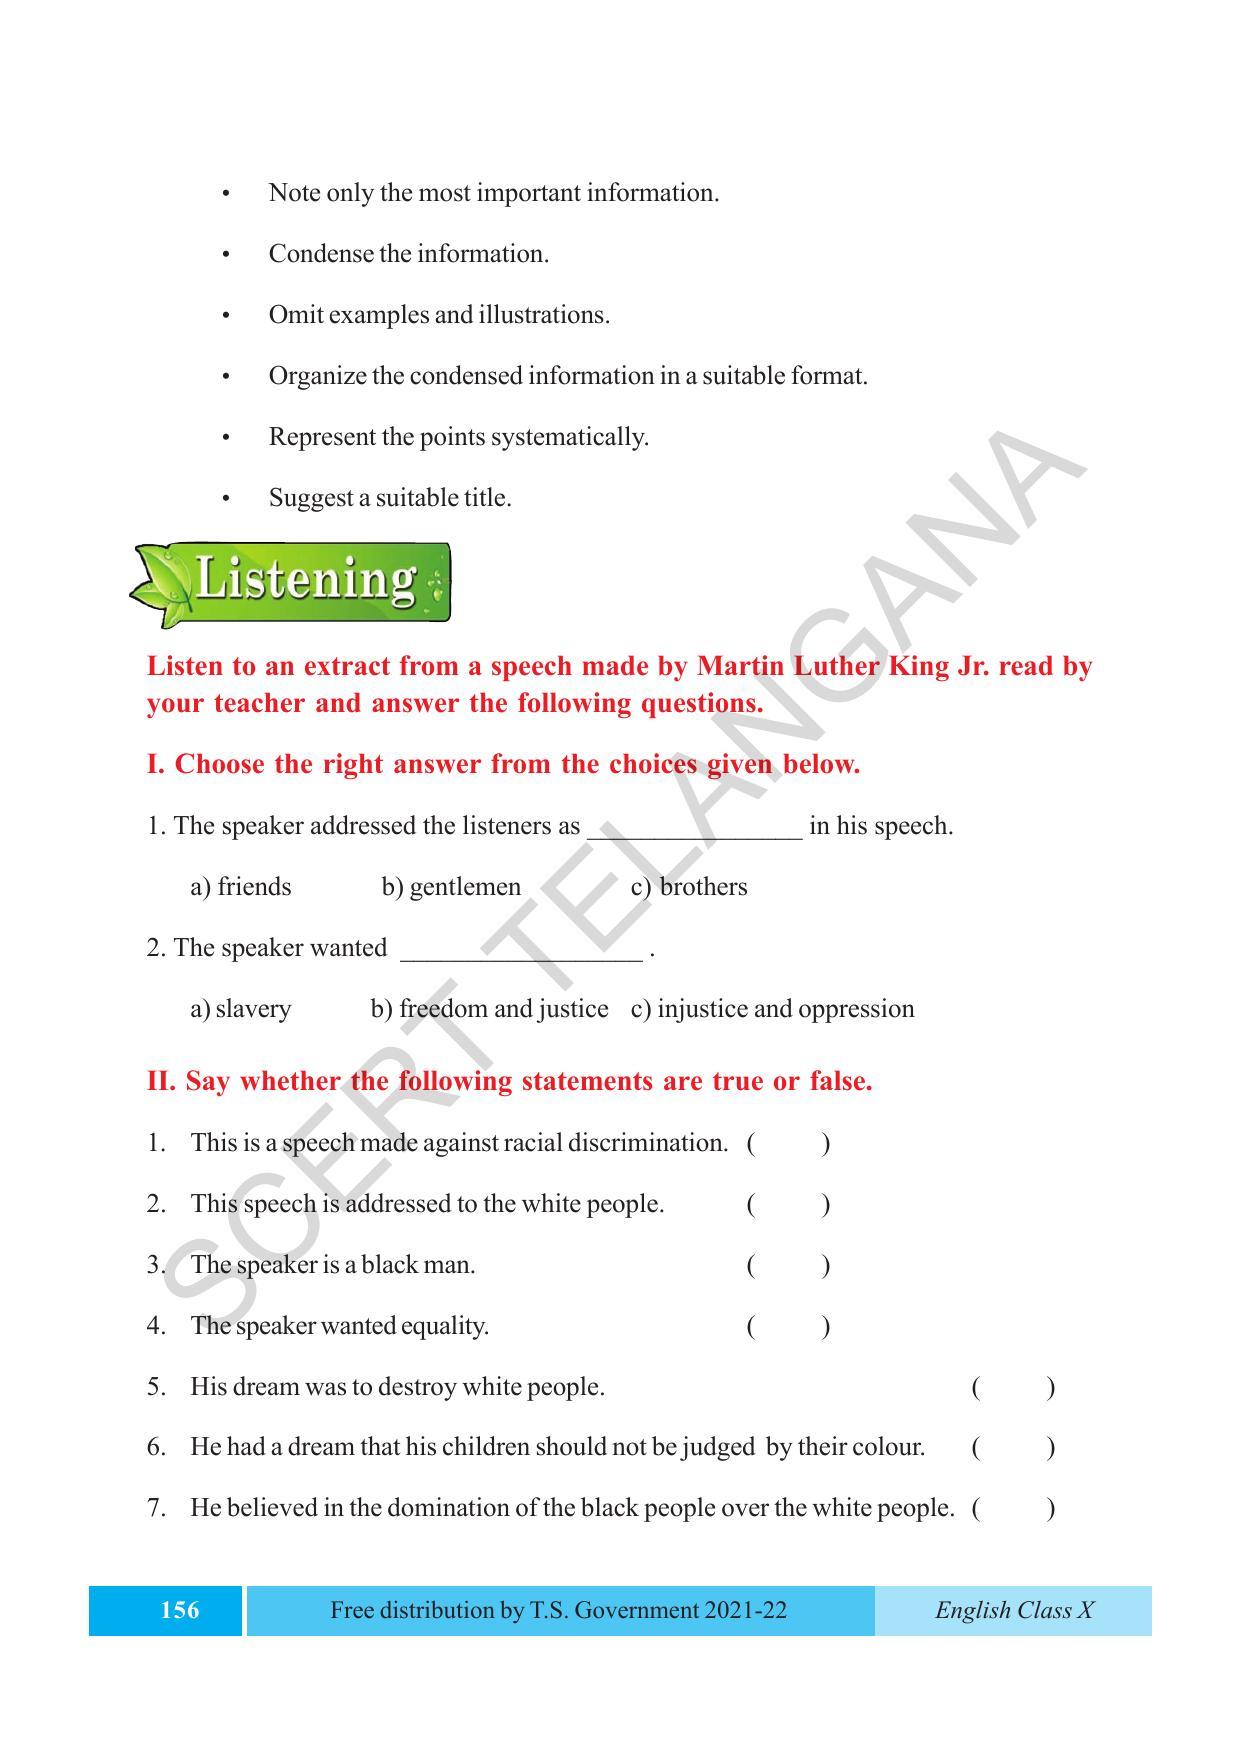 TS SCERT Class 10 EnglishText Book - Page 166